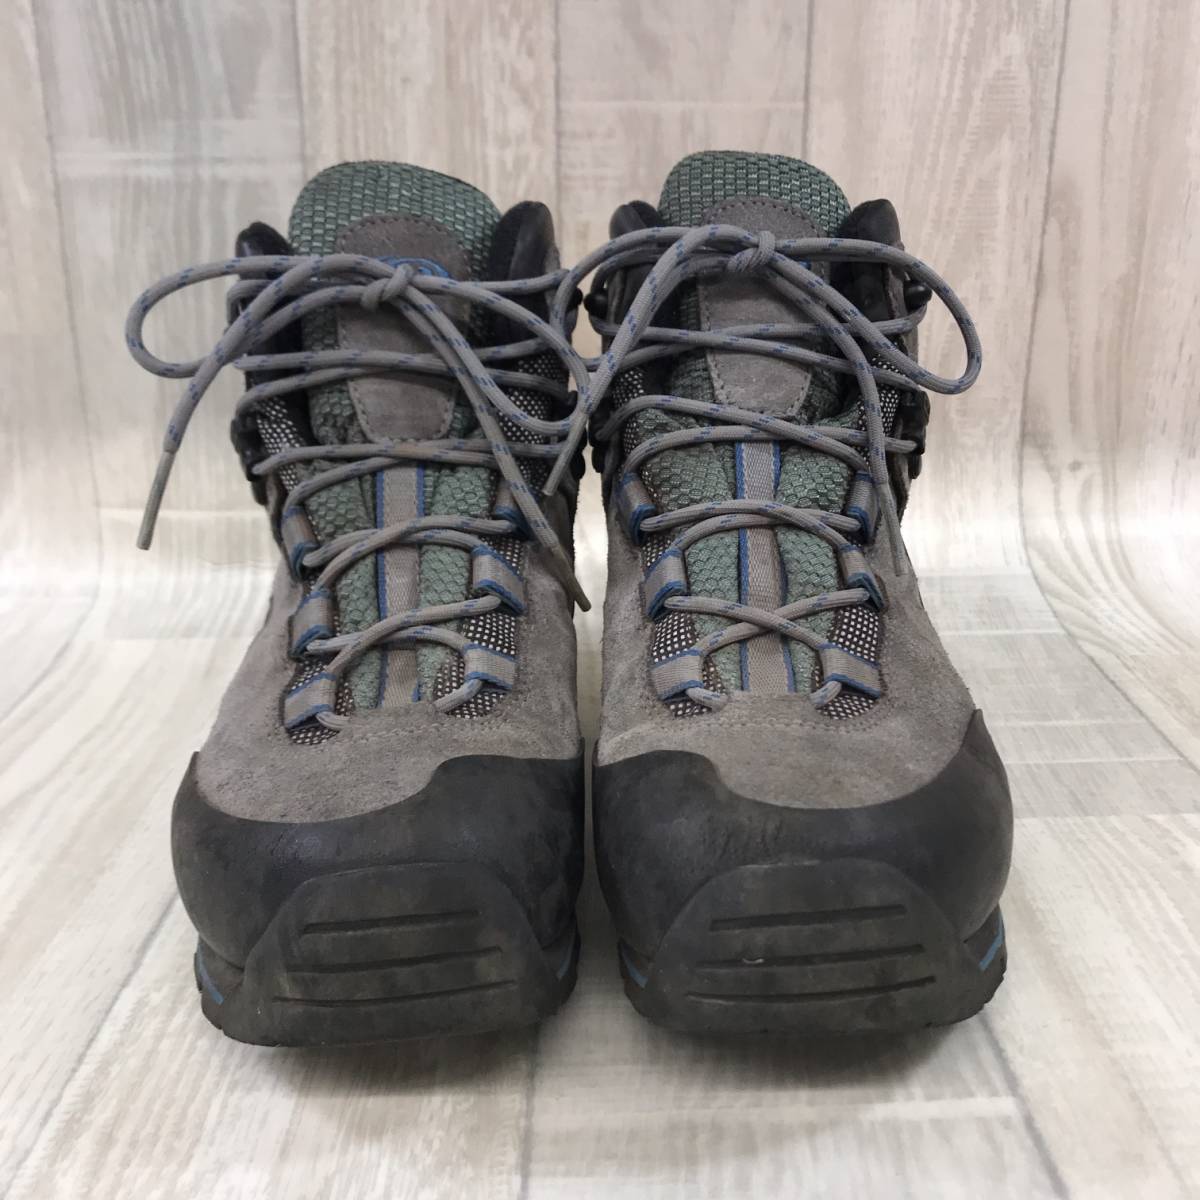 NZ2292*SALOMON : PROTREK 6 GTX W*24* gray box attaching Salomon Protrek waterproof trekking boots GORE-TEX